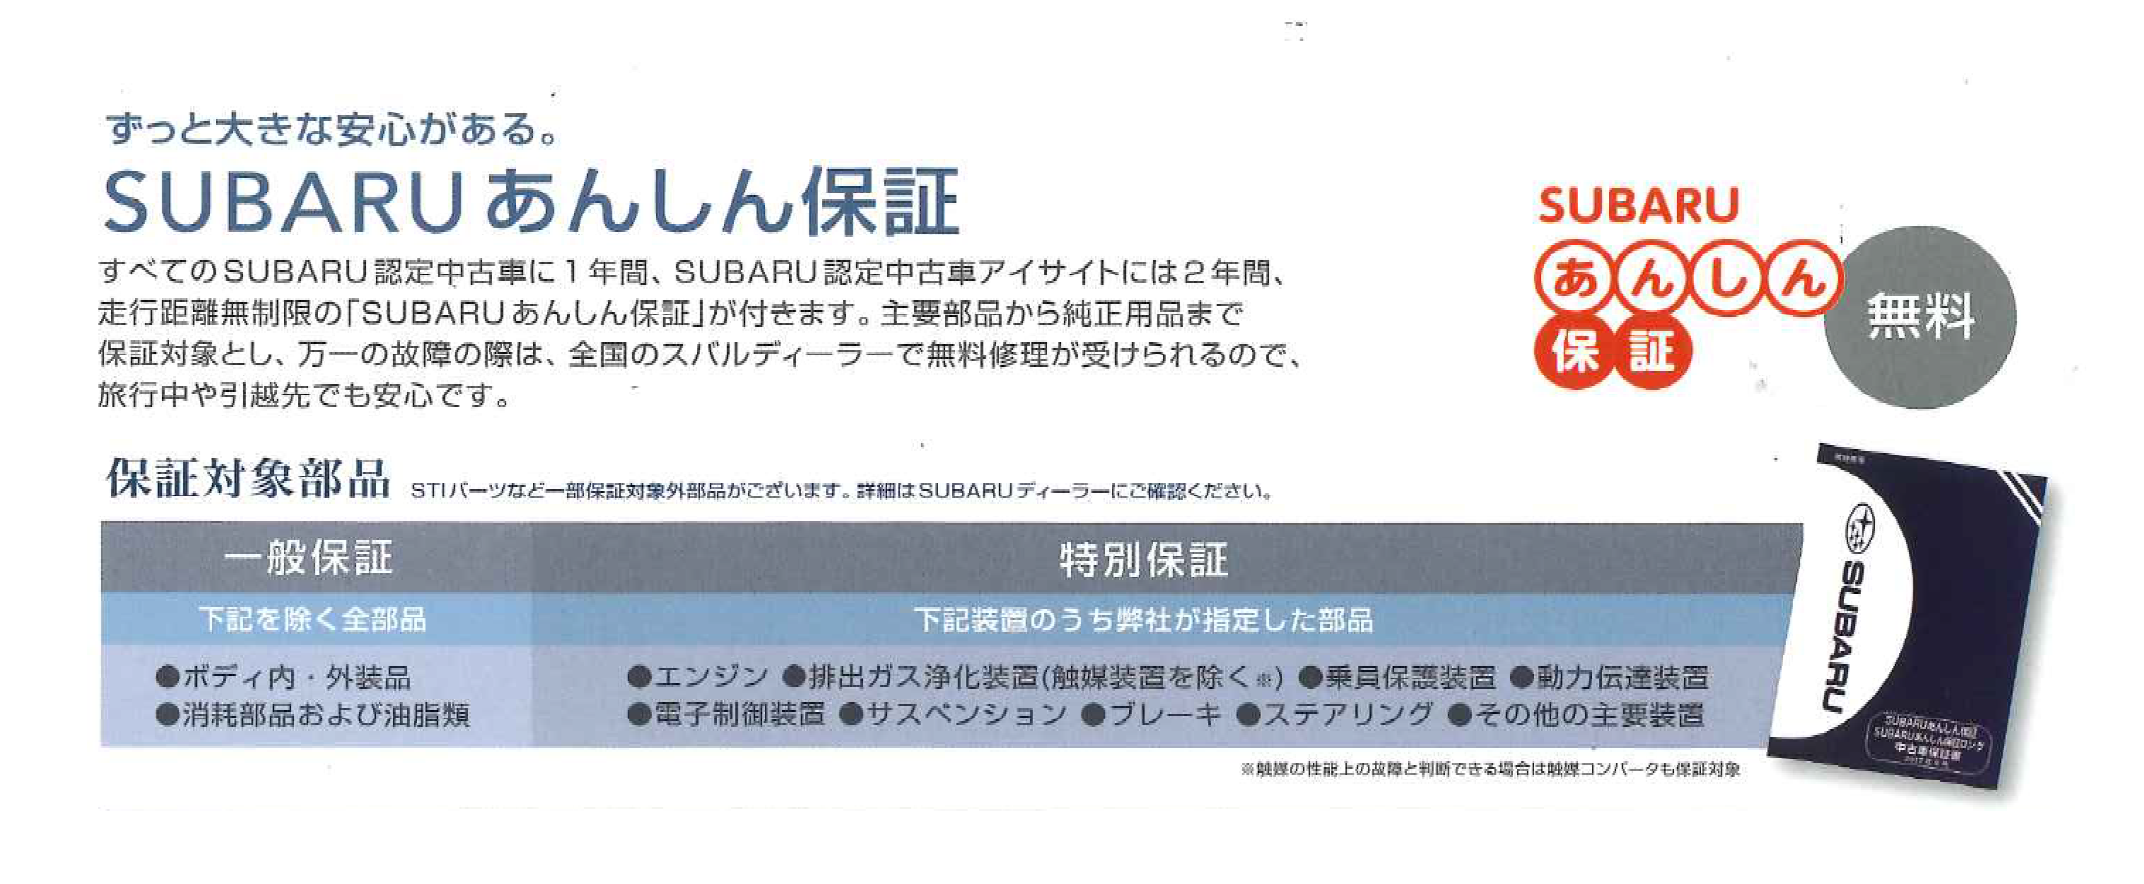 Subaru認定中古車について 広島スバル株式会社